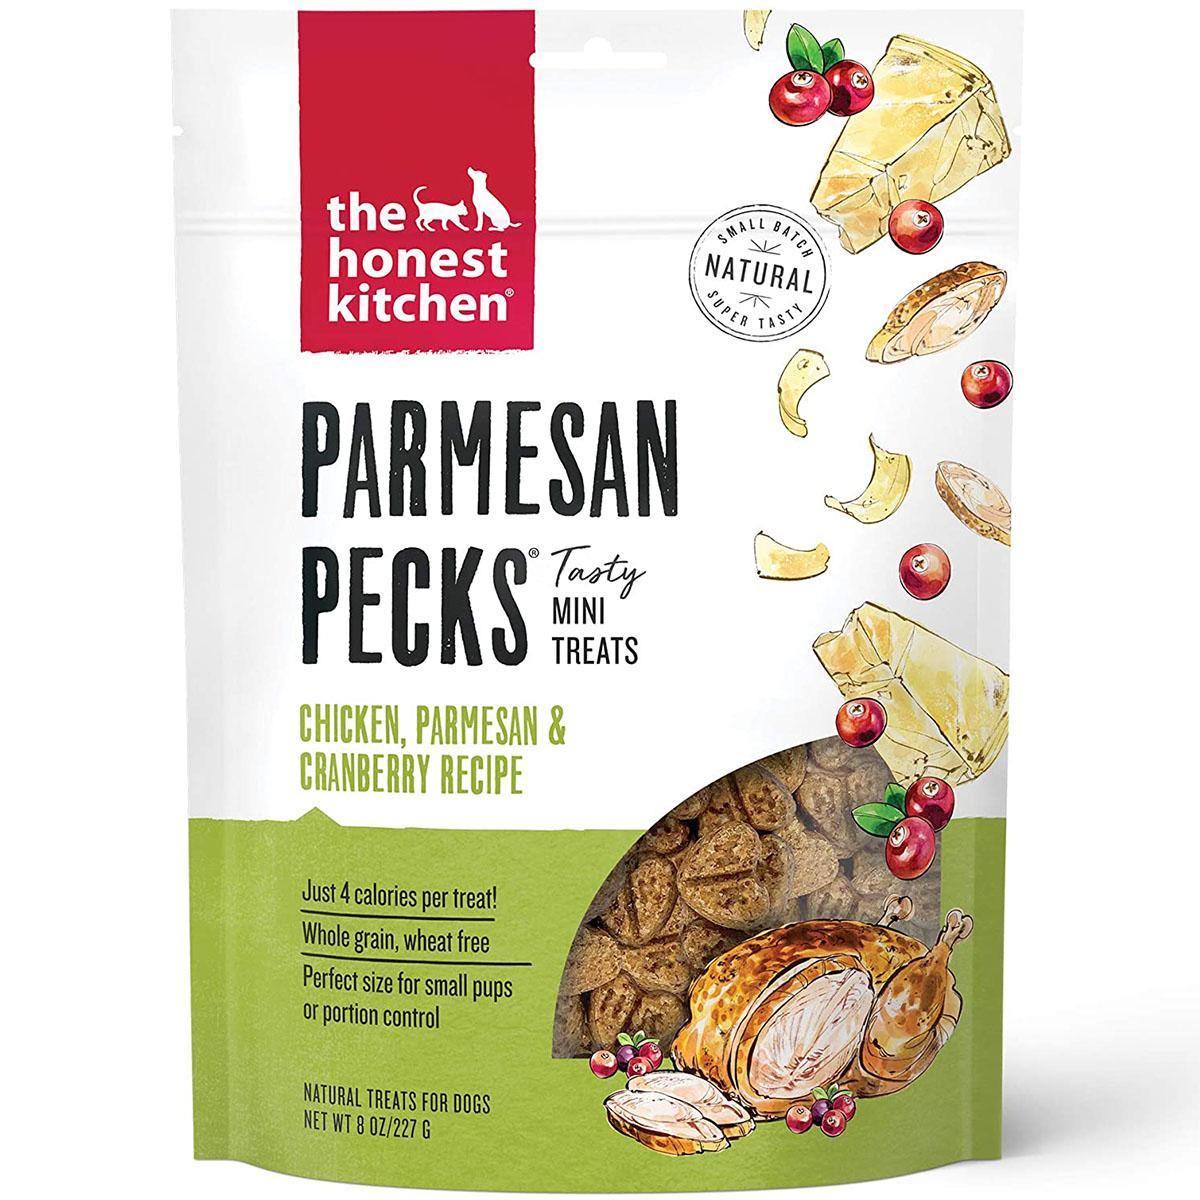 The Honest Kitchen Parmesan Pecks Dog Treats - Chicken, Parmesan & Cranberry Recipe